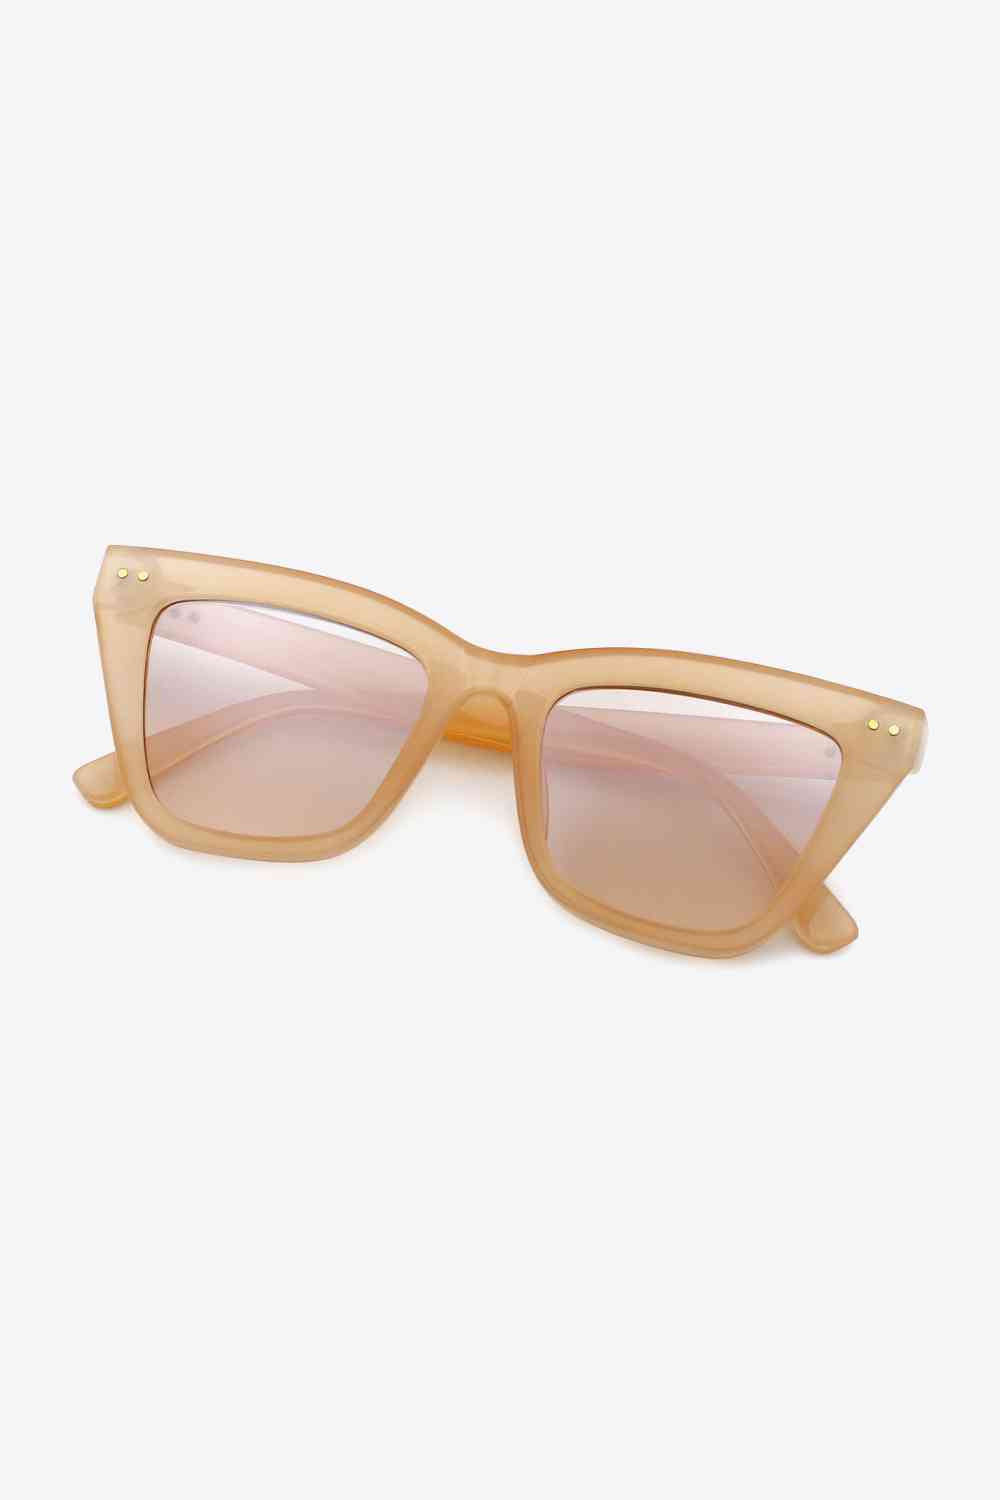 UV400 Polycarbonate Frame Sunglasses Light Apricot One Size